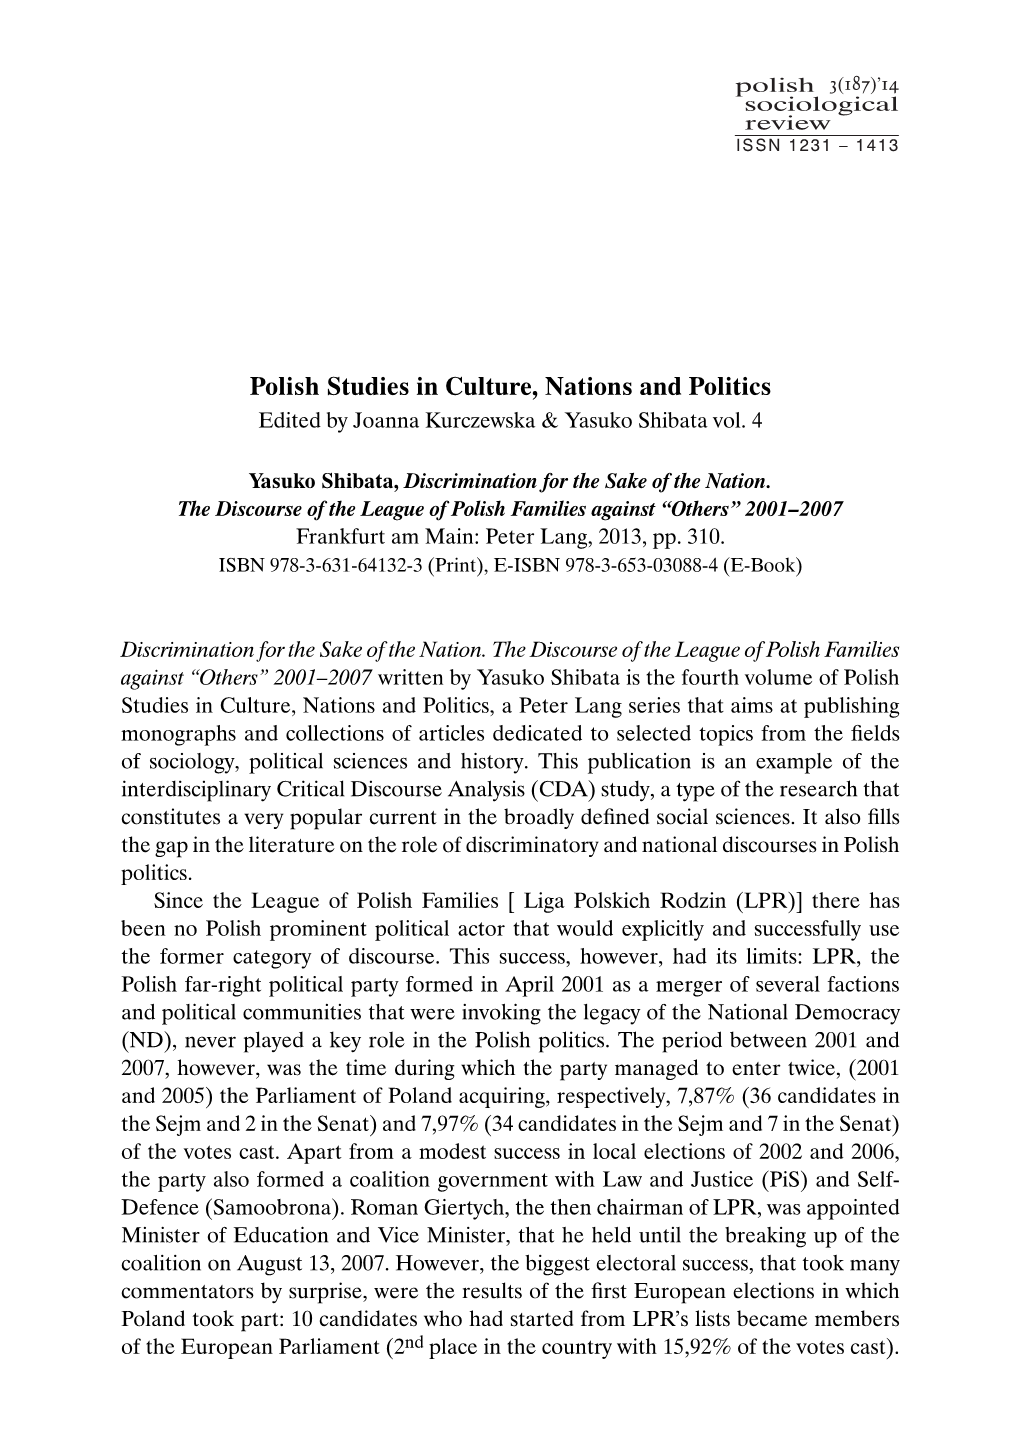 Polish Studies in Culture, Nations and Politics Edited by Joanna Kurczewska & Yasuko Shibata Vol